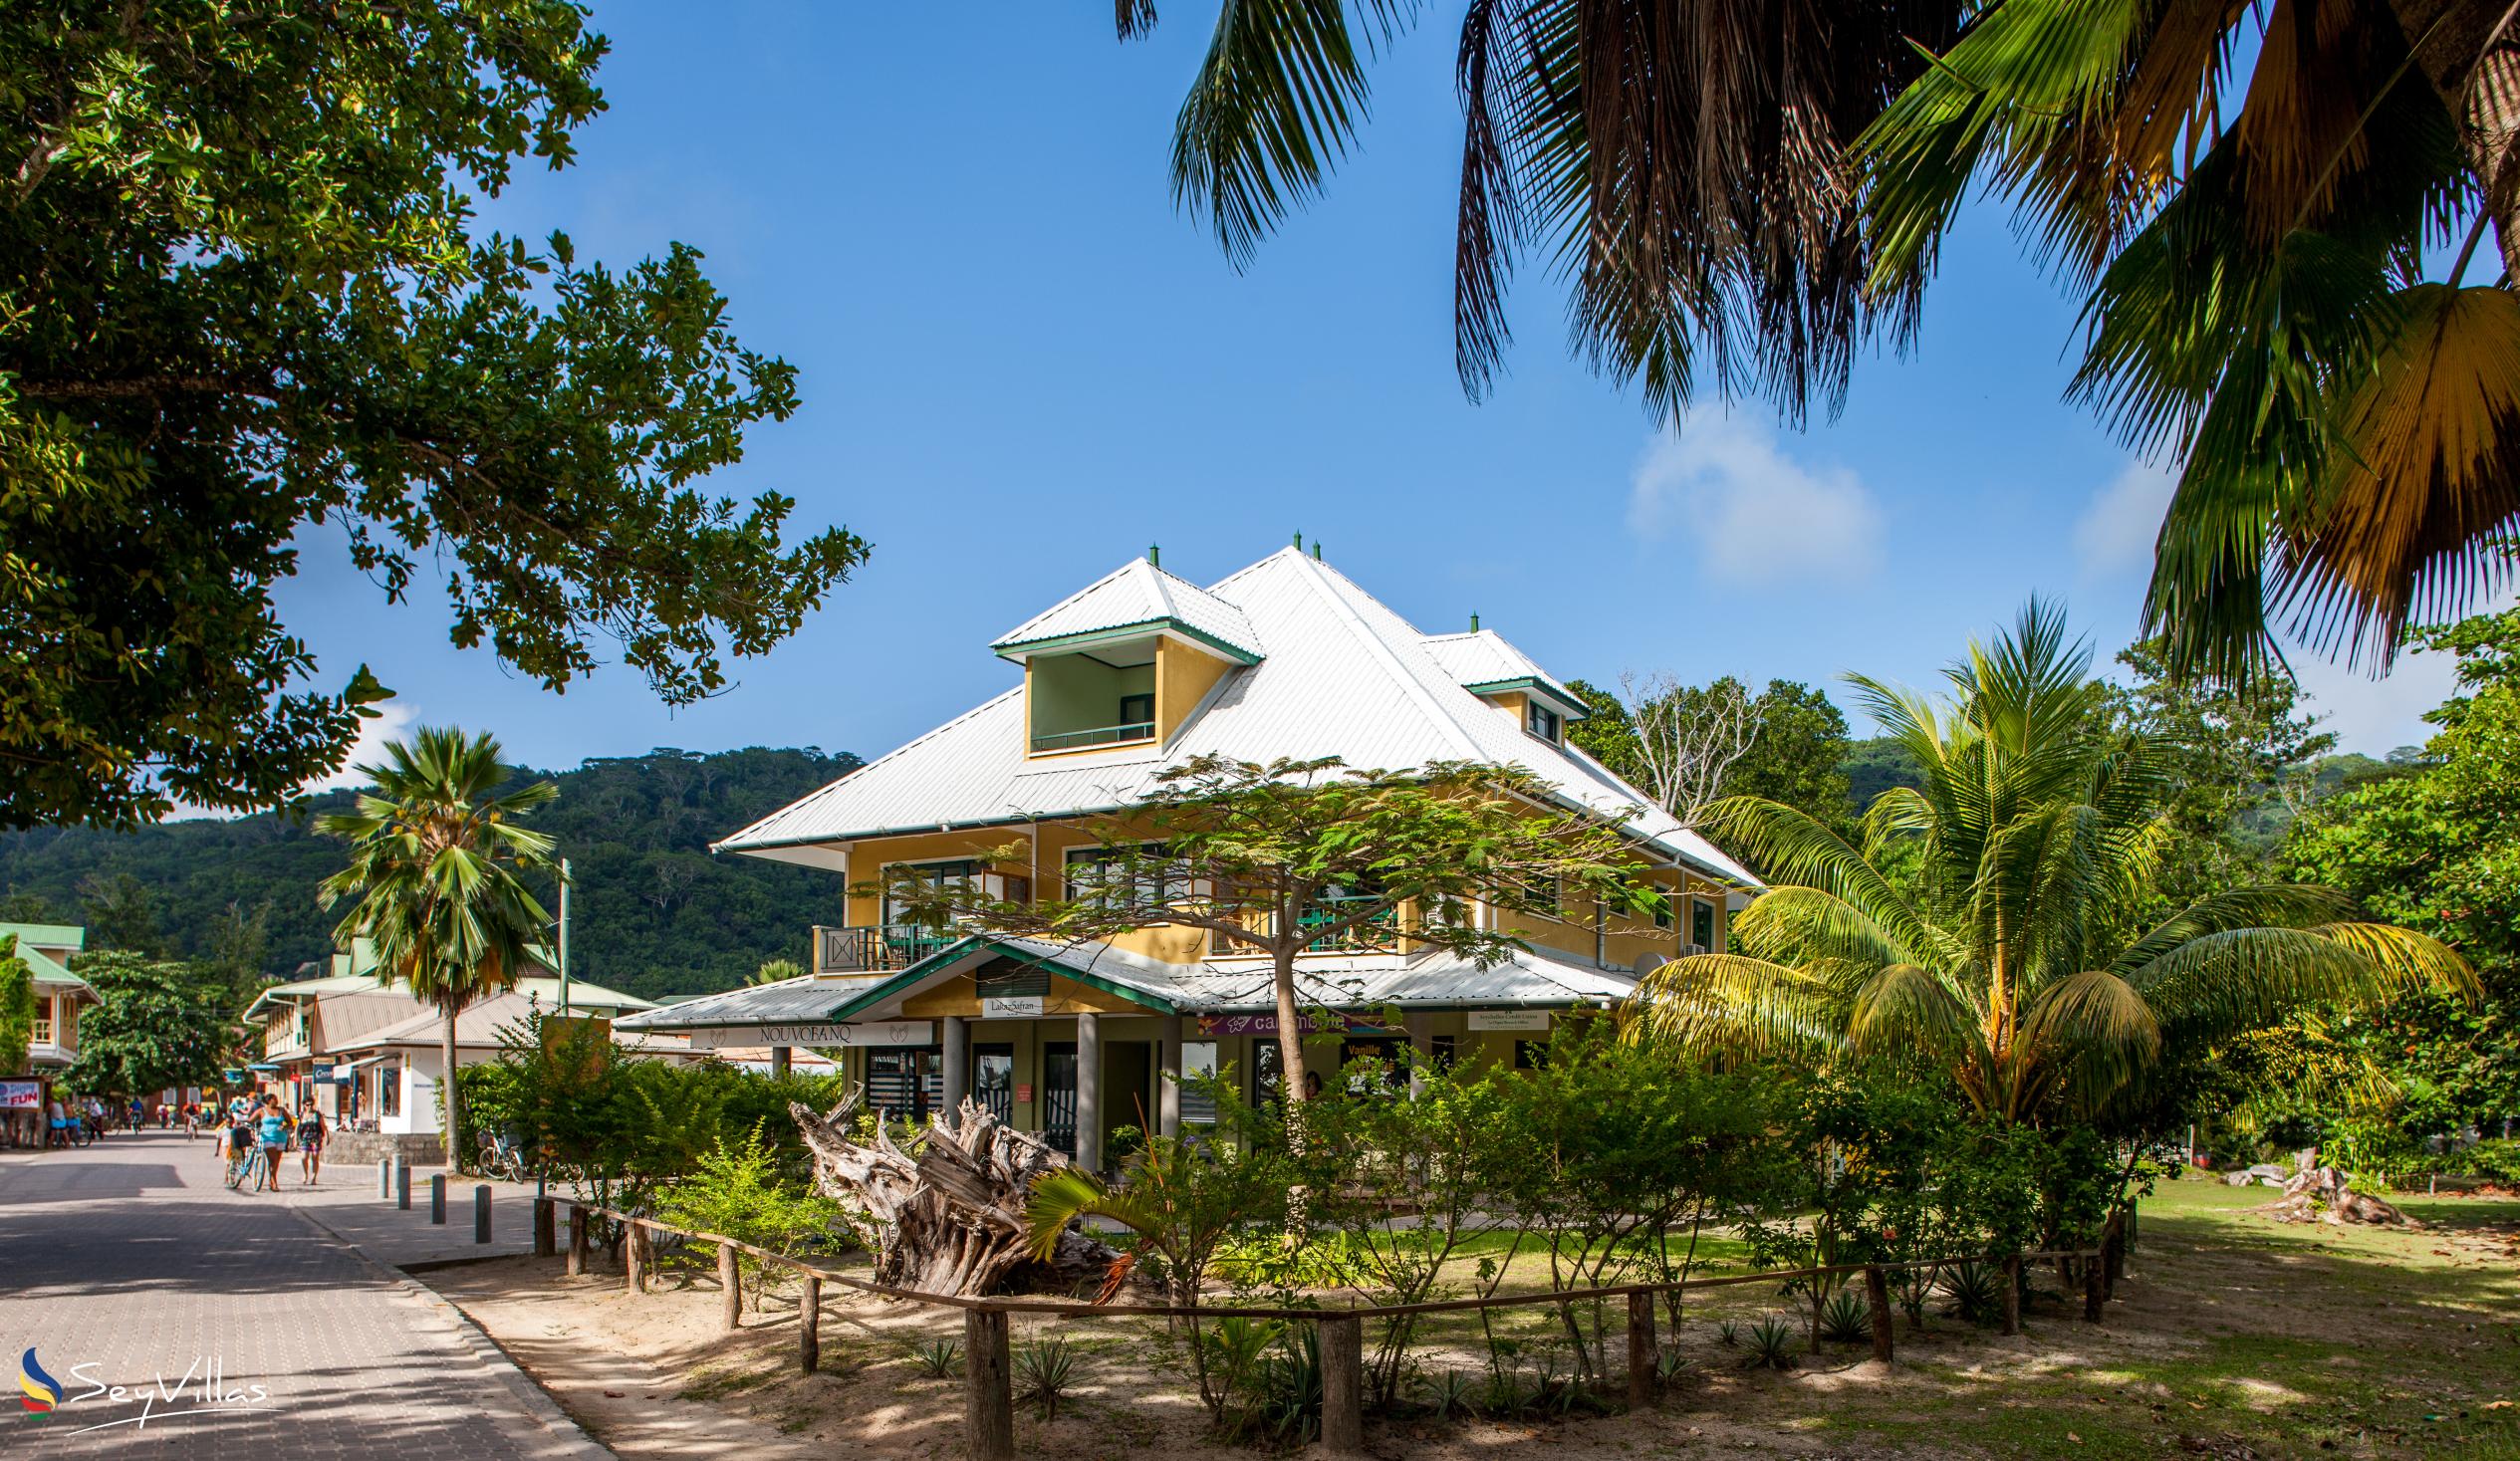 Photo 3: La Kaz Safran - Outdoor area - La Digue (Seychelles)